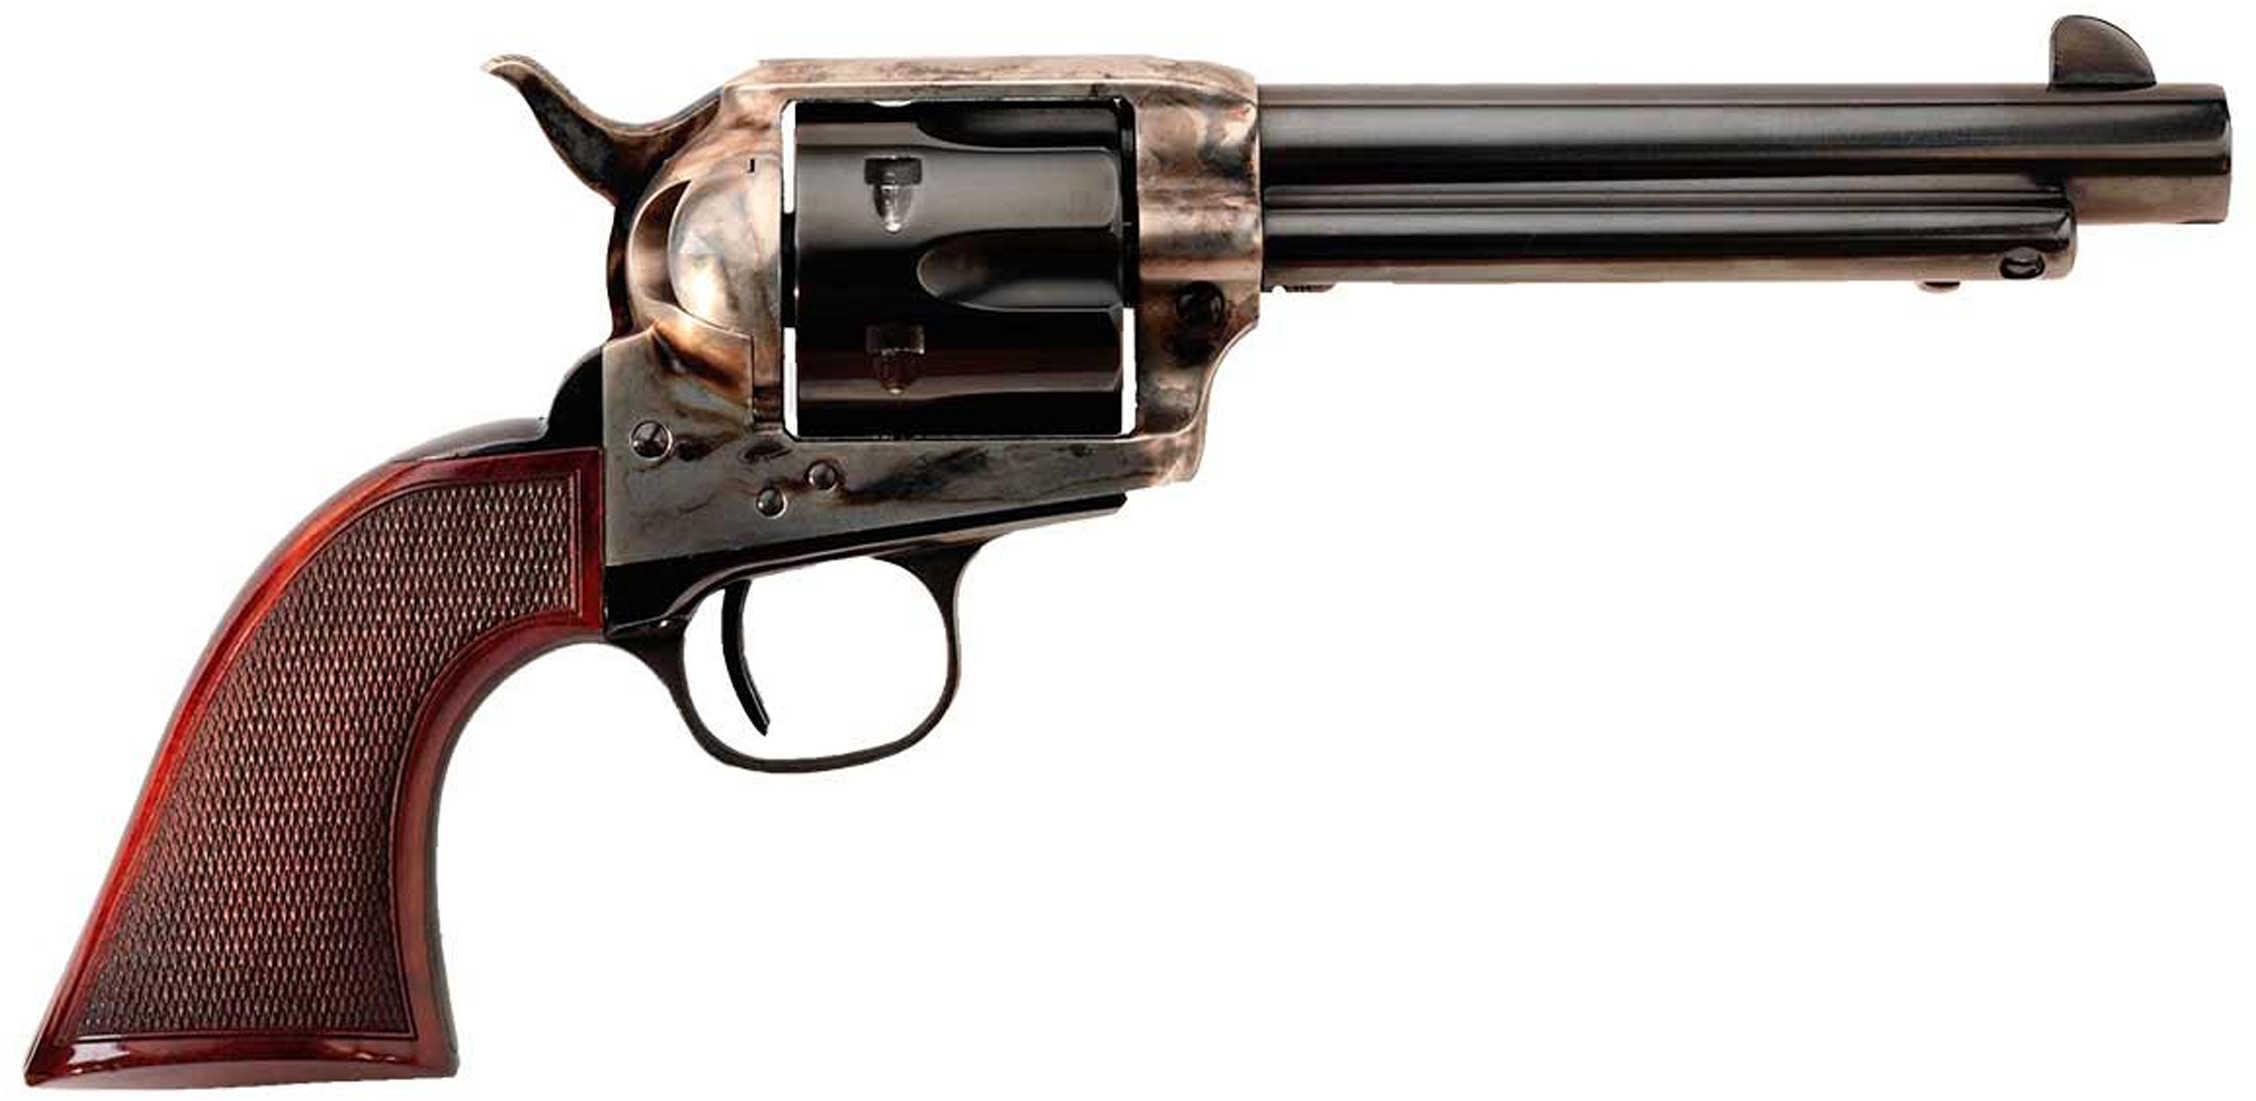 Taylor's & Company The Smoke Wagon 357 Magnum 5.5" Barrel 6 Round Single Action Revolver 4108